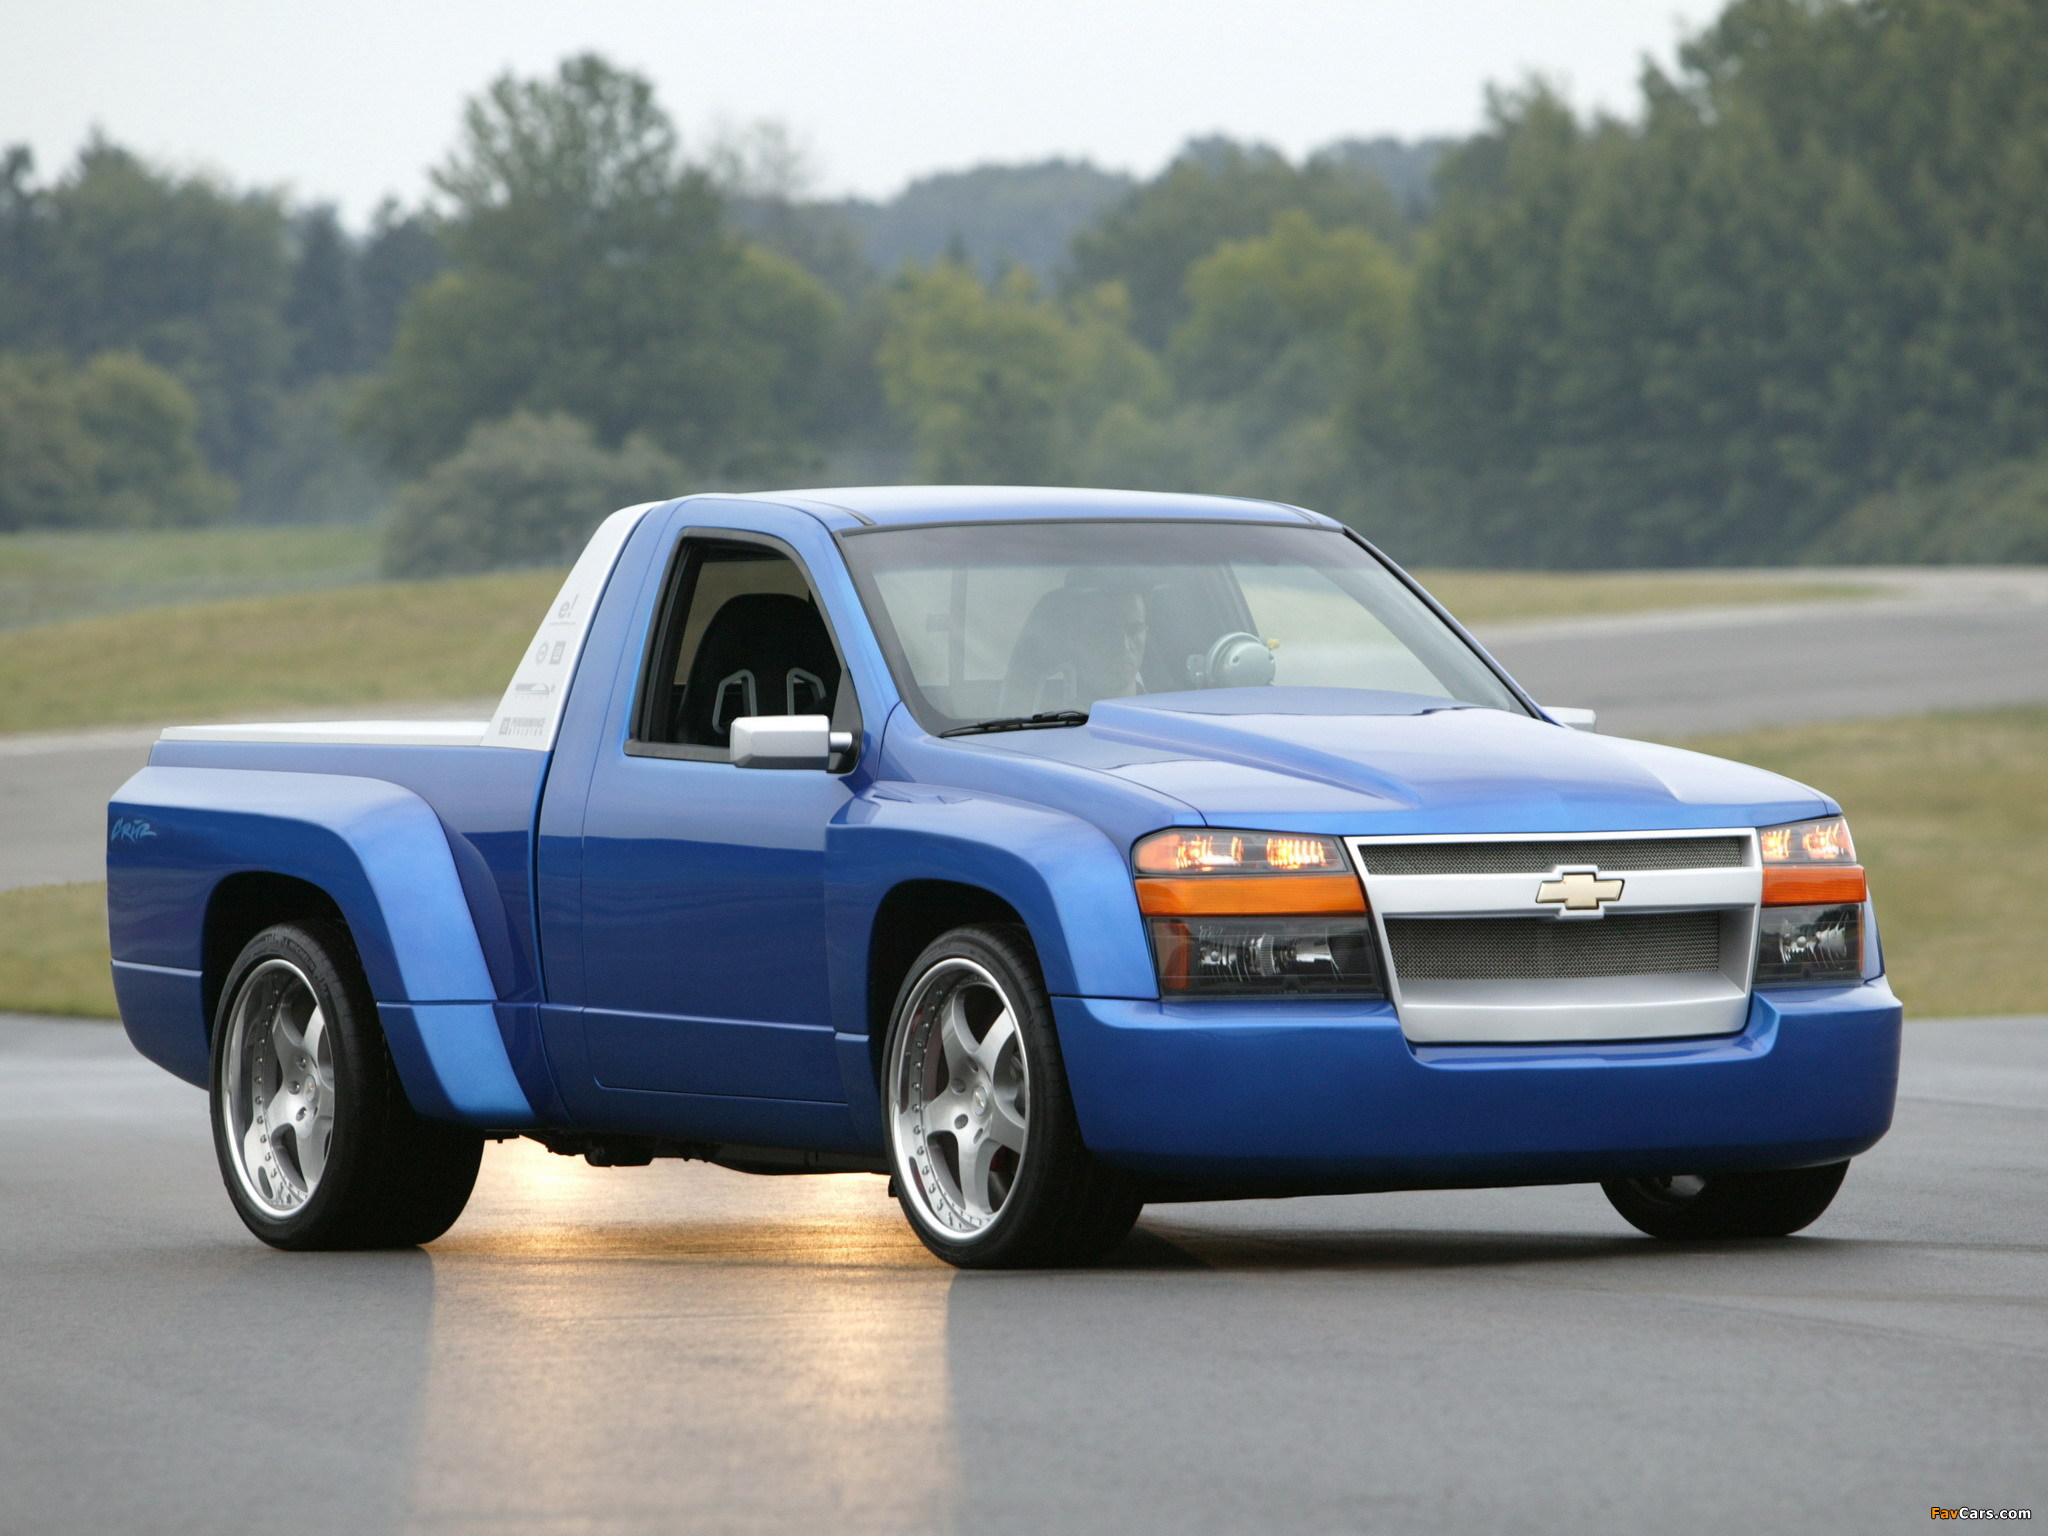 Круз пикап. Chevrolet Colorado 2004. Chevrolet Concept 2004. Chevrolet Pickup 2005. Американский пикап Шевроле.